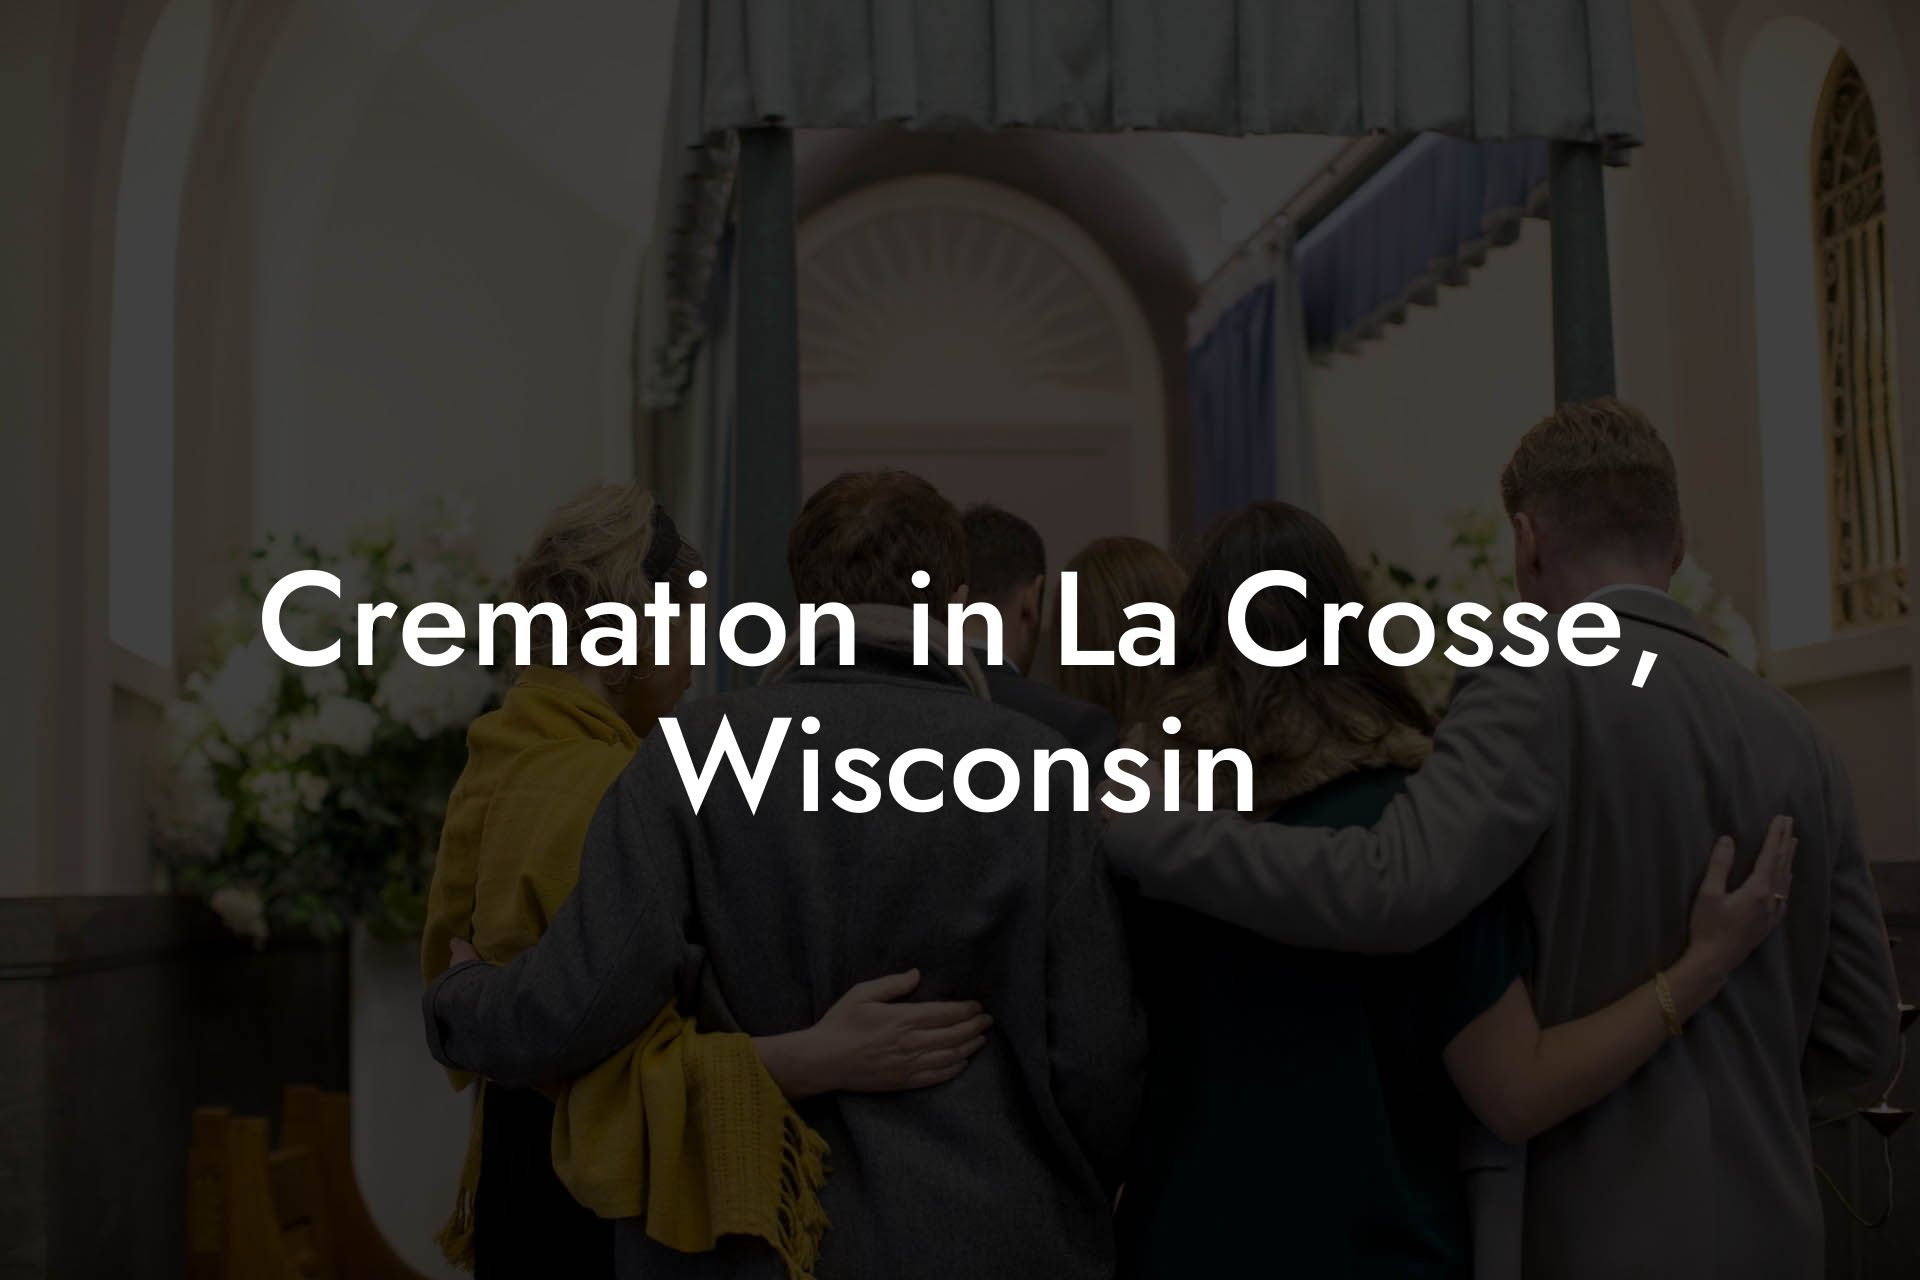 Cremation in La Crosse, Wisconsin